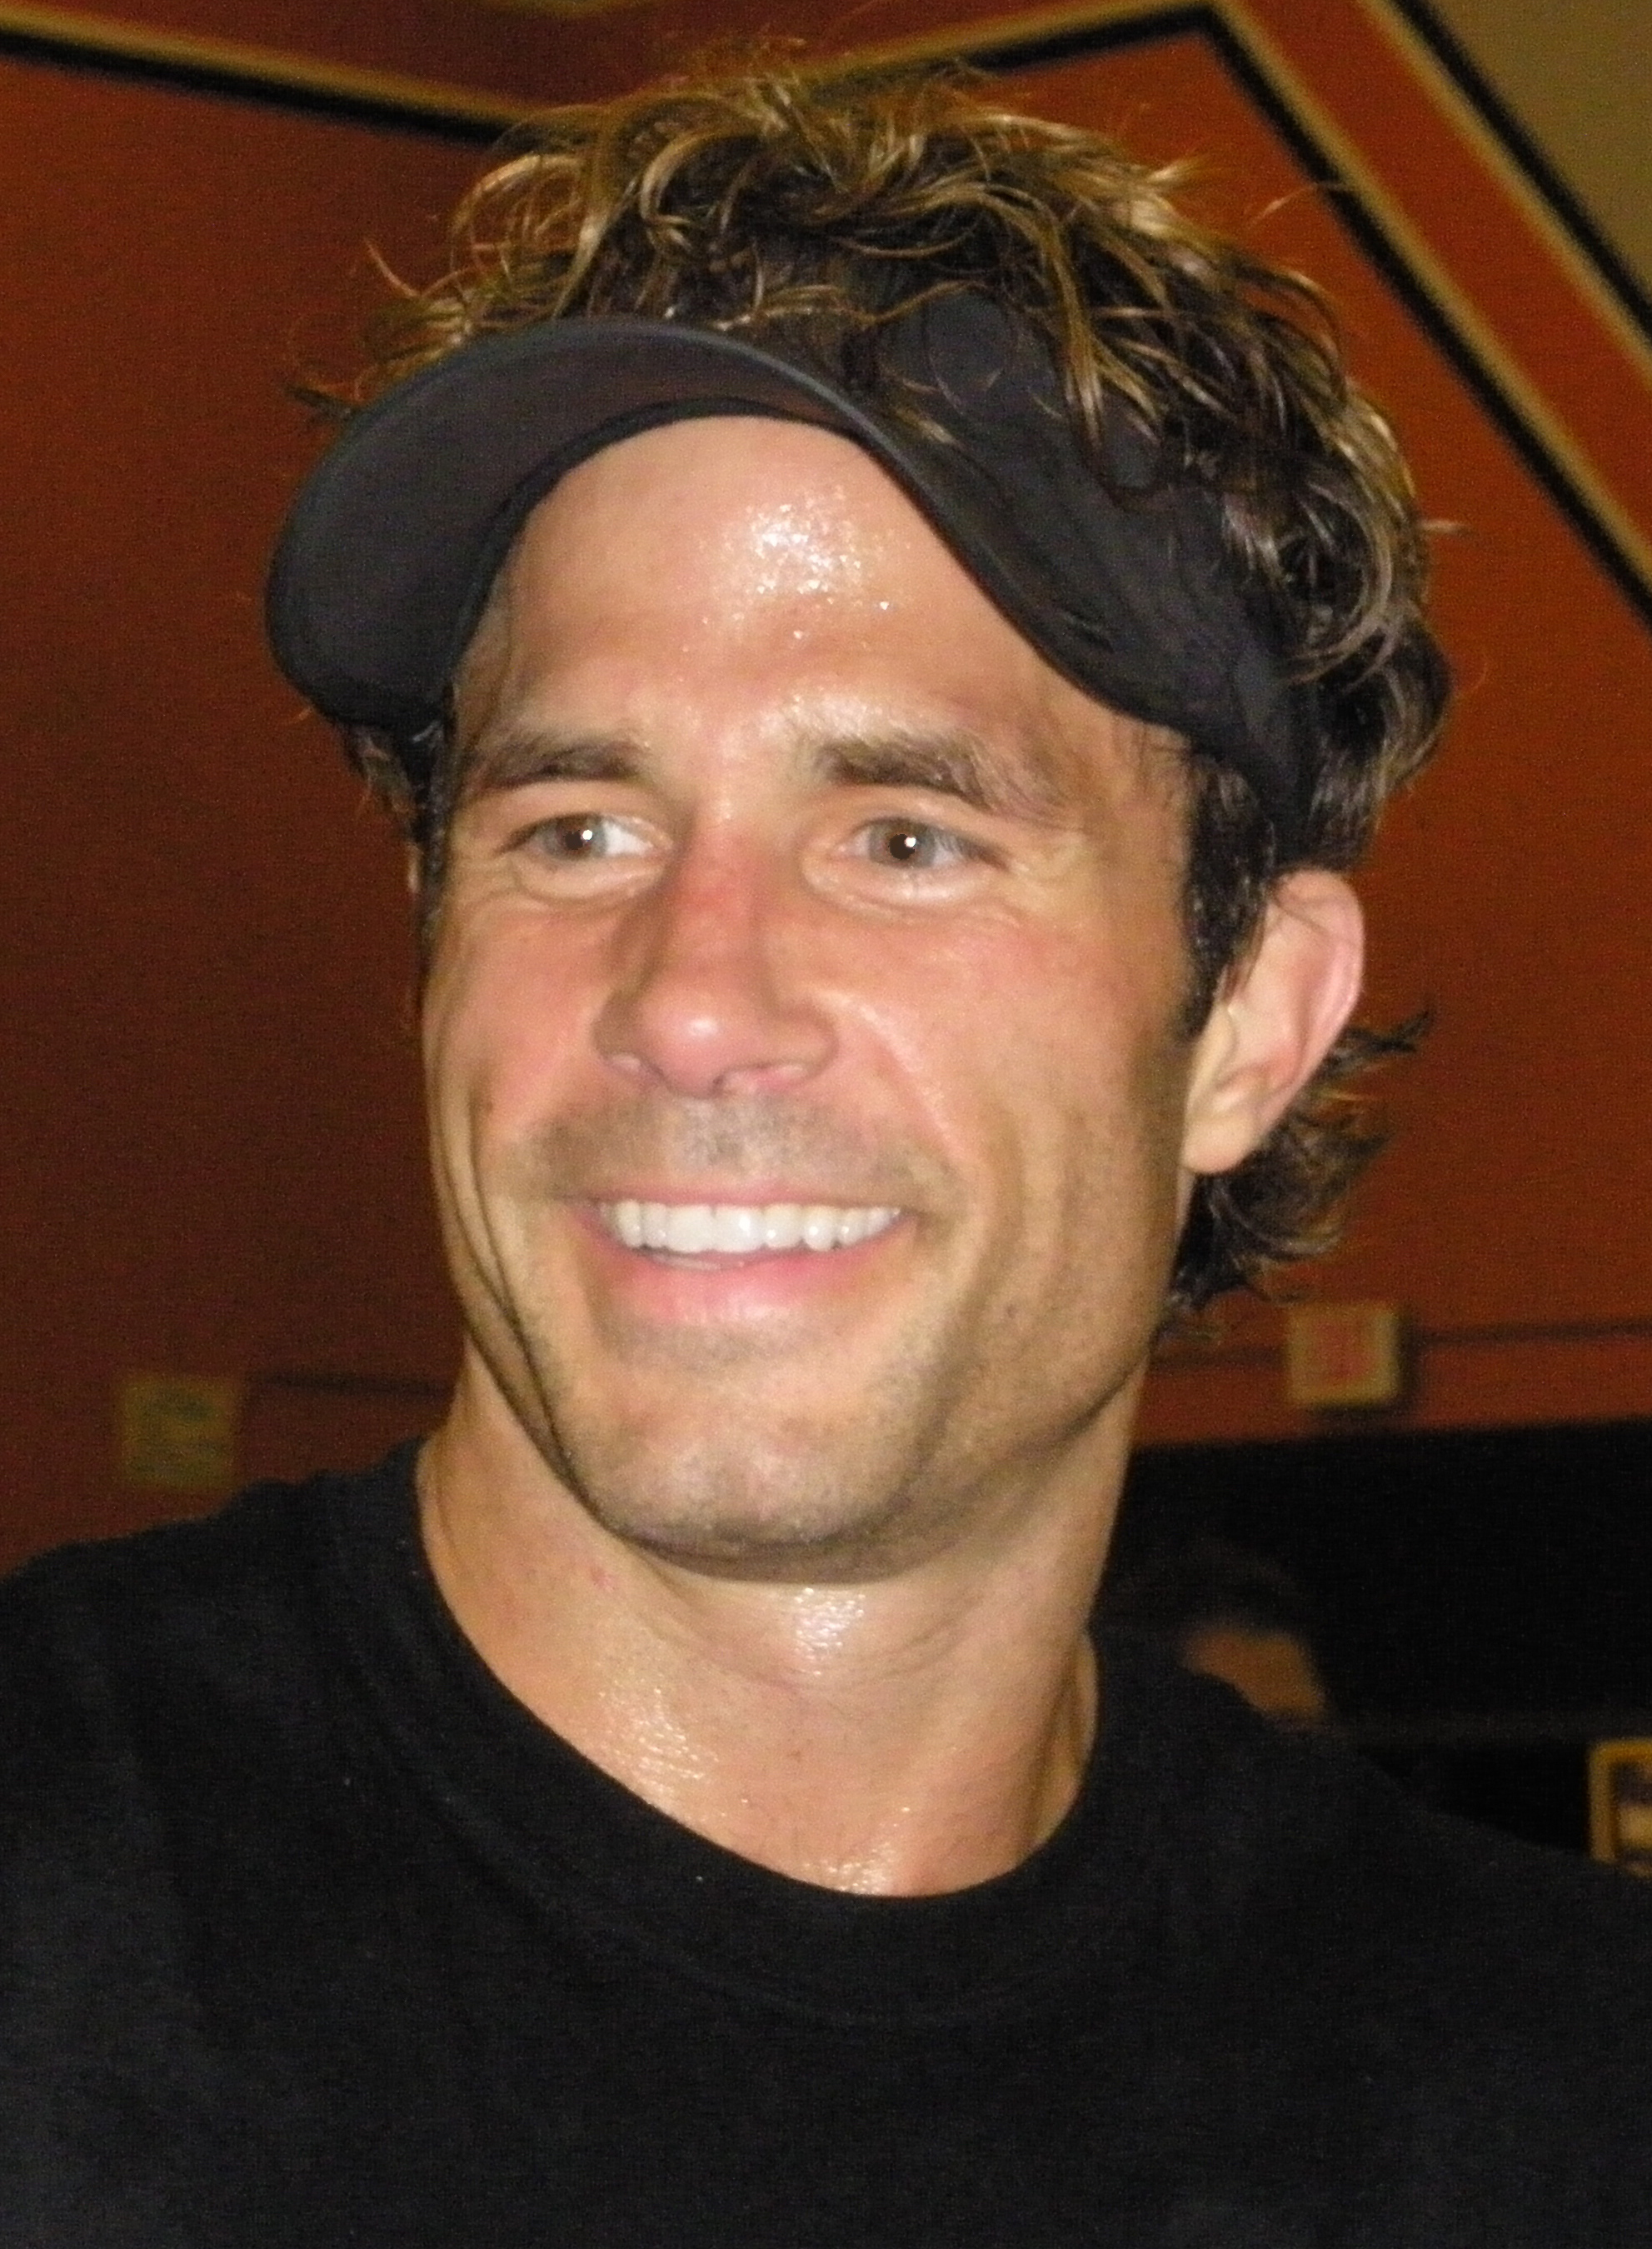 Christian in 2009